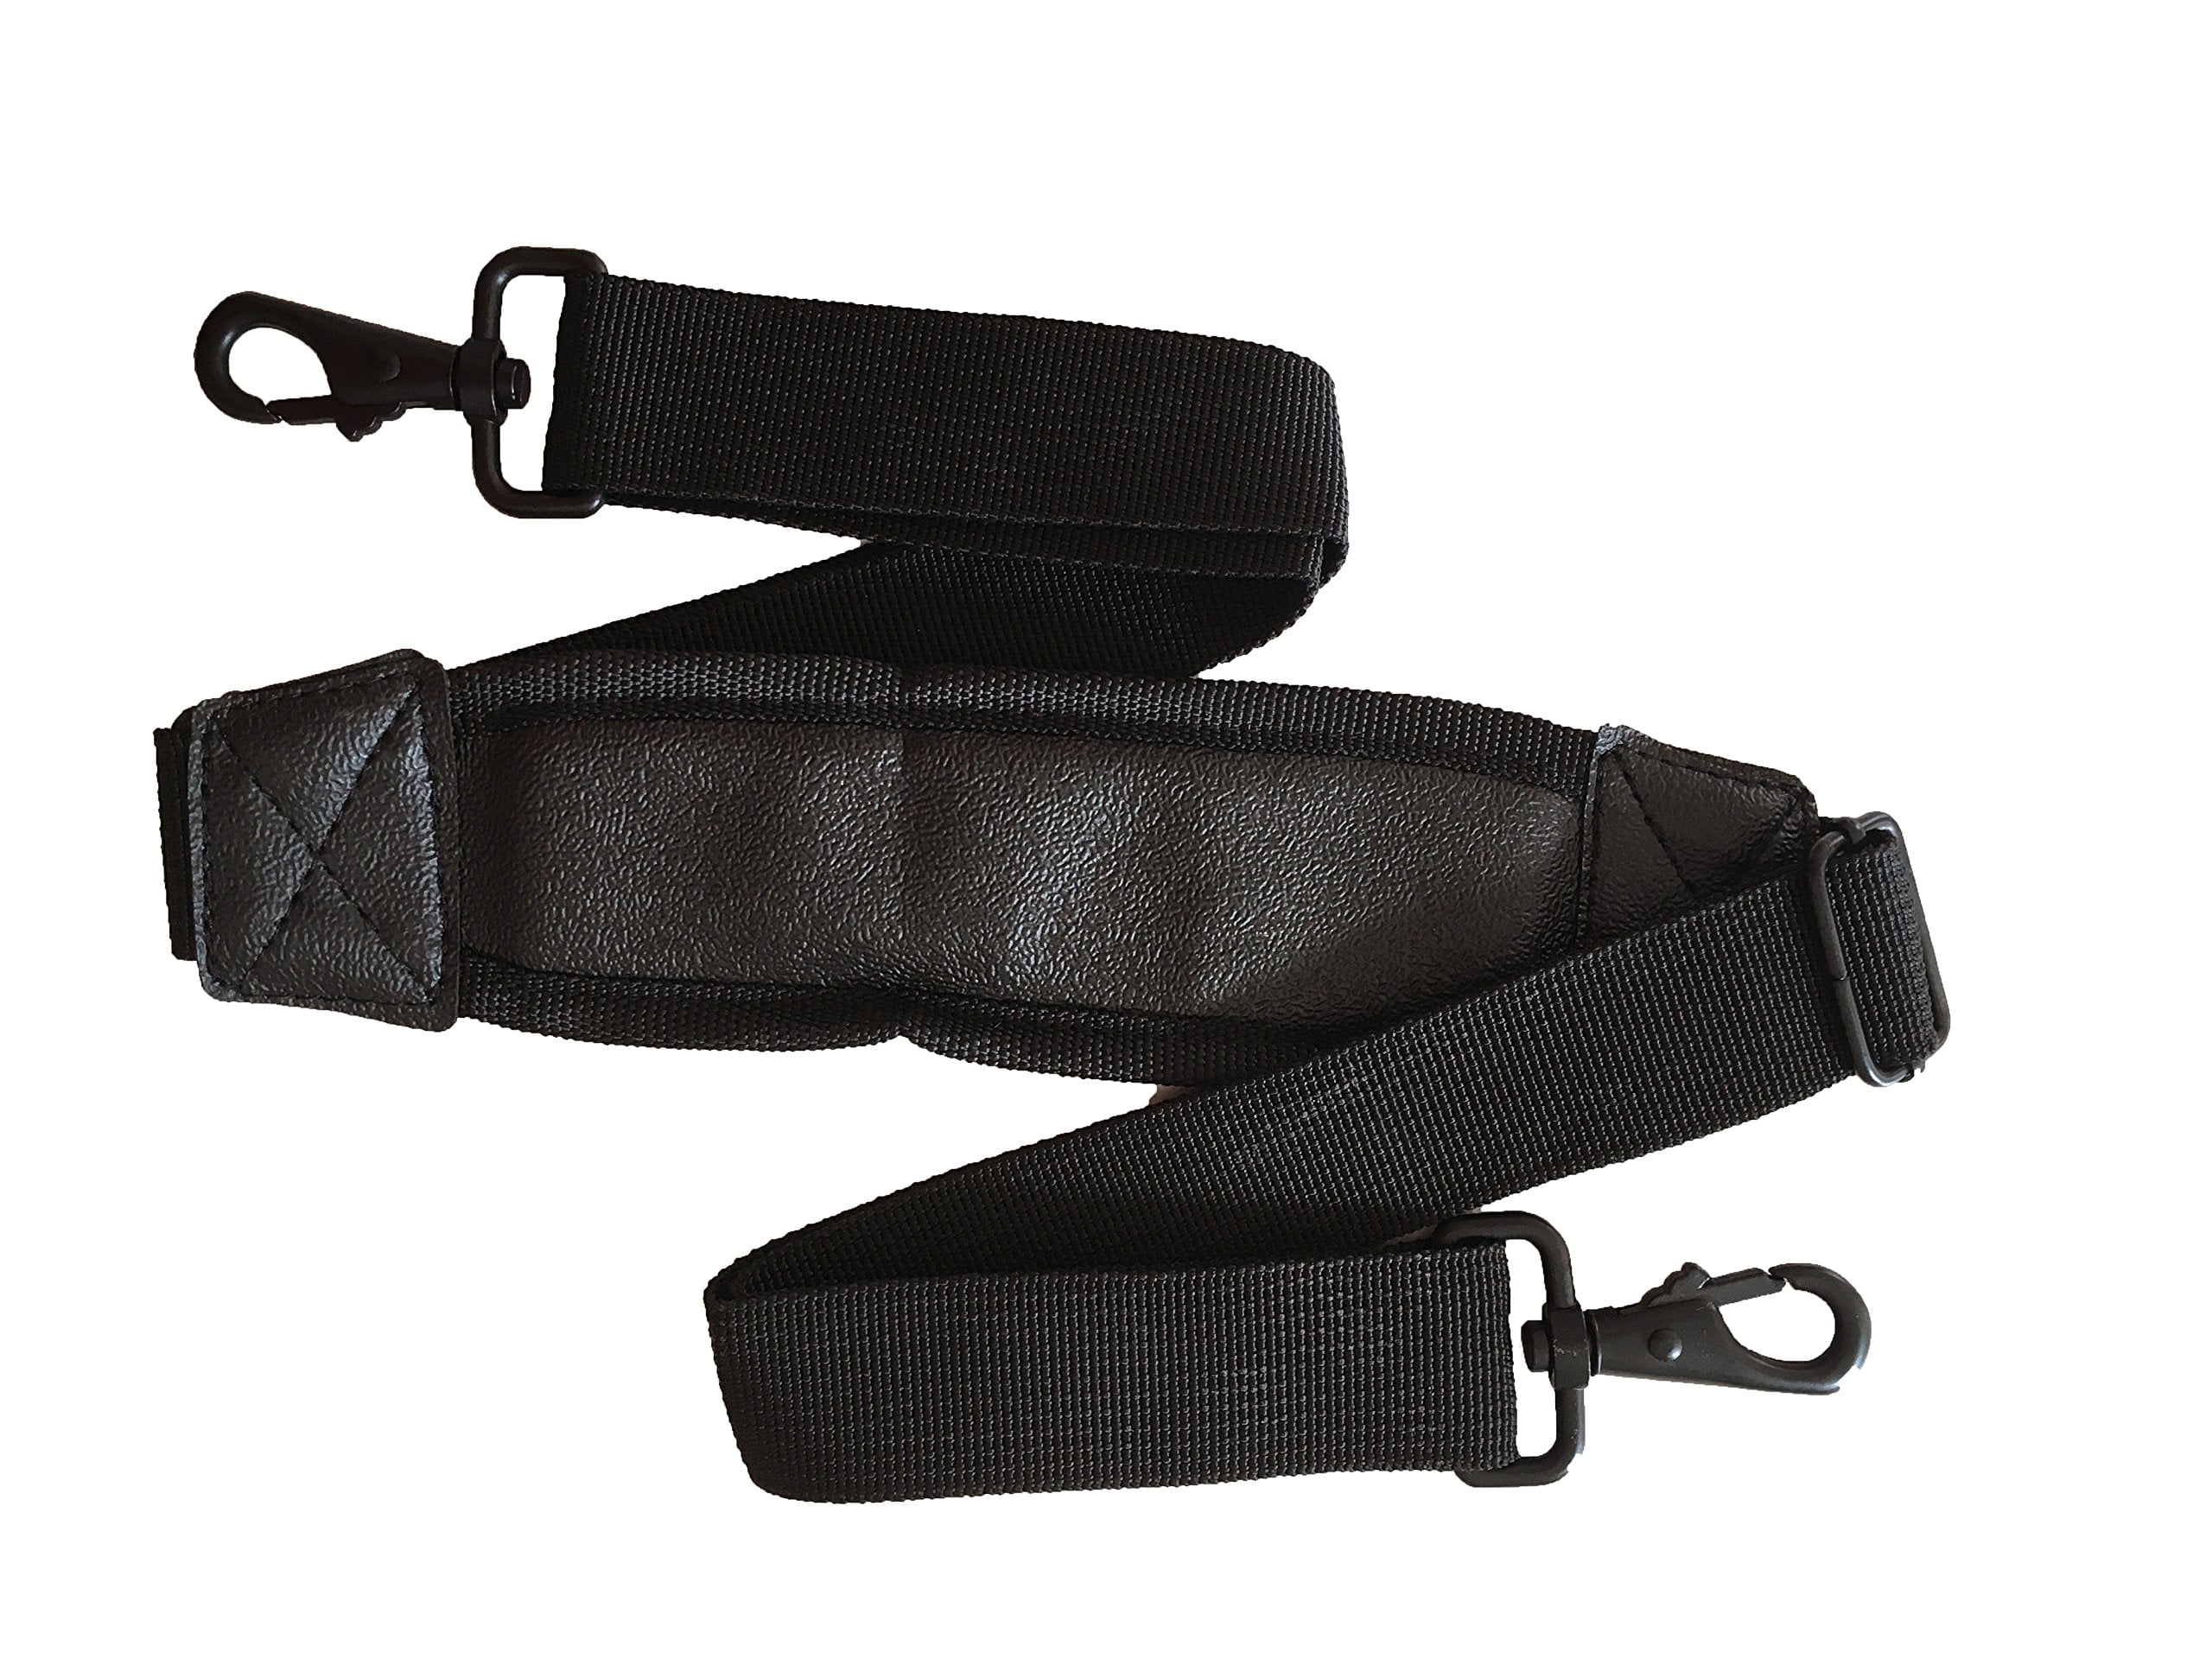 Adjustable Guitar Bag Strap, Black/Tan hearts print, leather